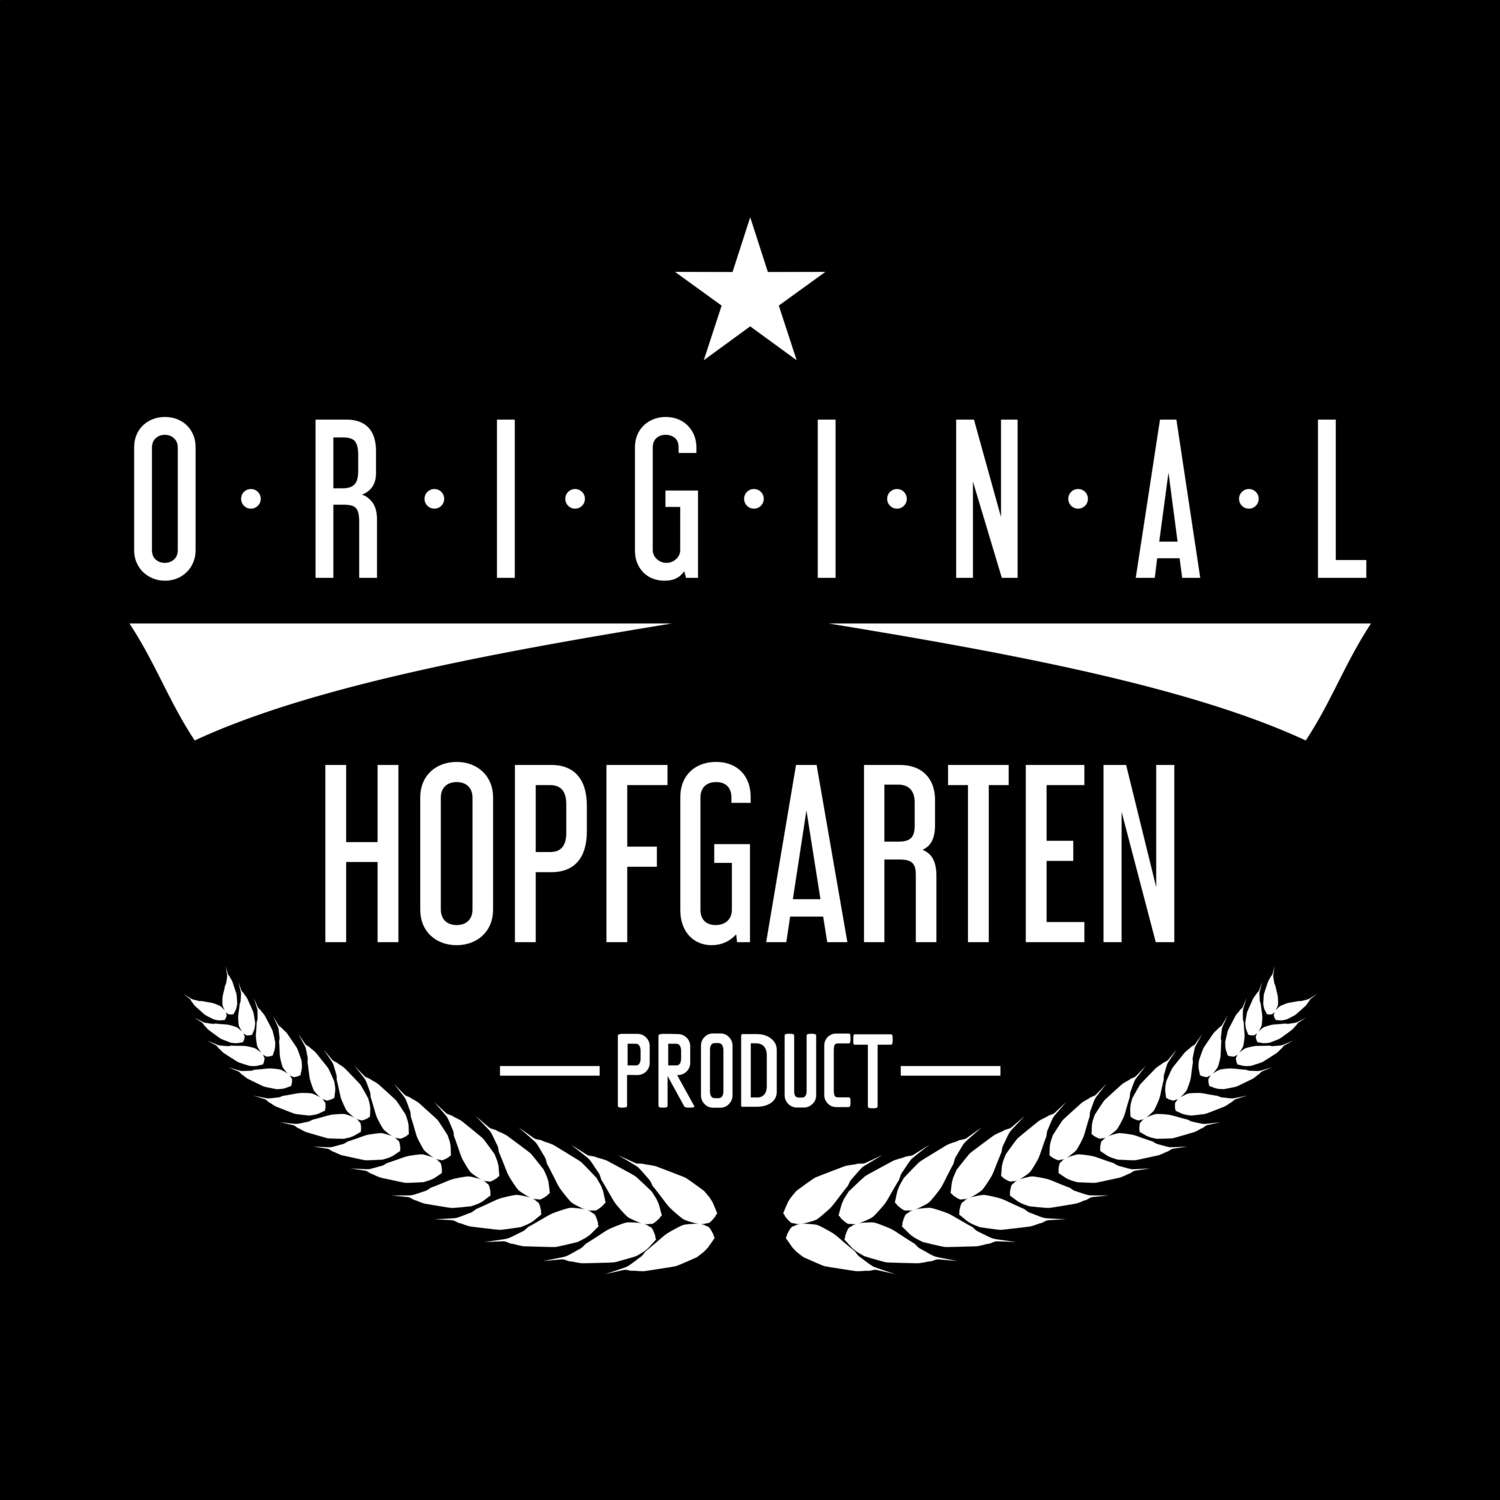 Hopfgarten T-Shirt »Original Product«